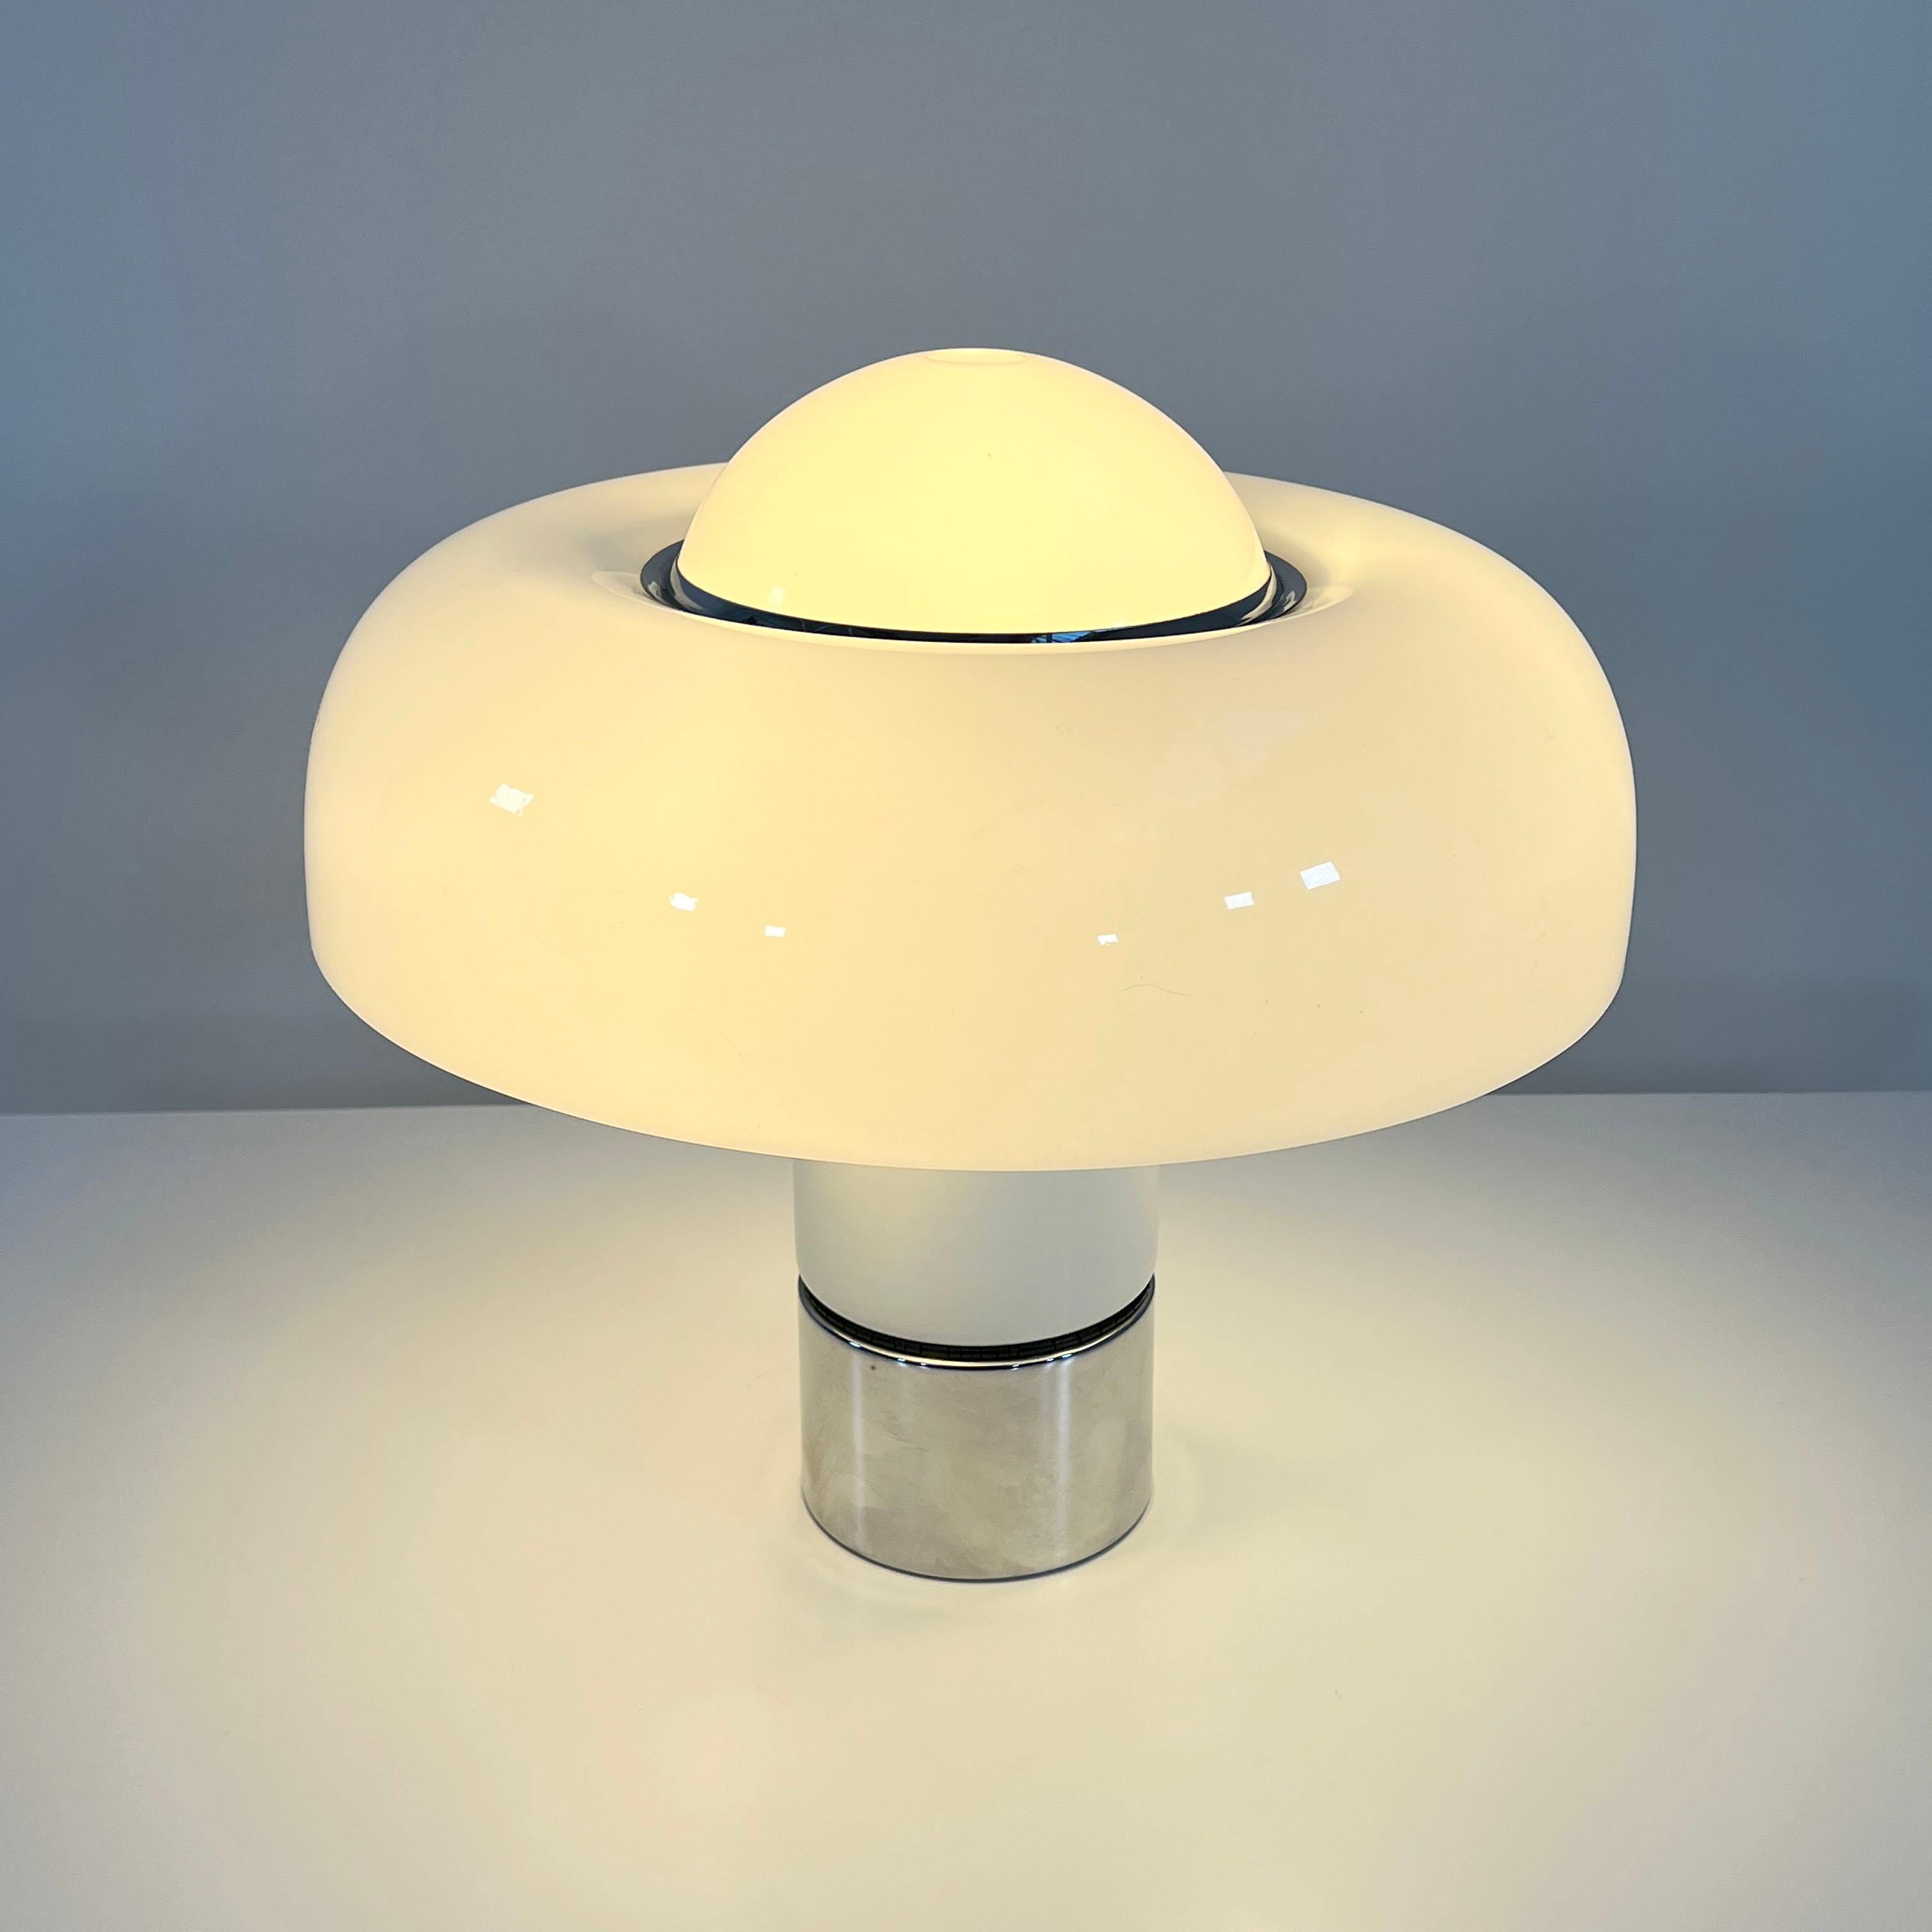 Designer - Luigi Massoni
Producer - Guzzini
Model - Brumbury Table Lamp
Design Period - Seventies
Measurements - Width 50 cm x Depth 50 cm x Height 50 cm 
Materials - Perspex plastic, chrome plating, metal 
Color - White, Silver
Light wear